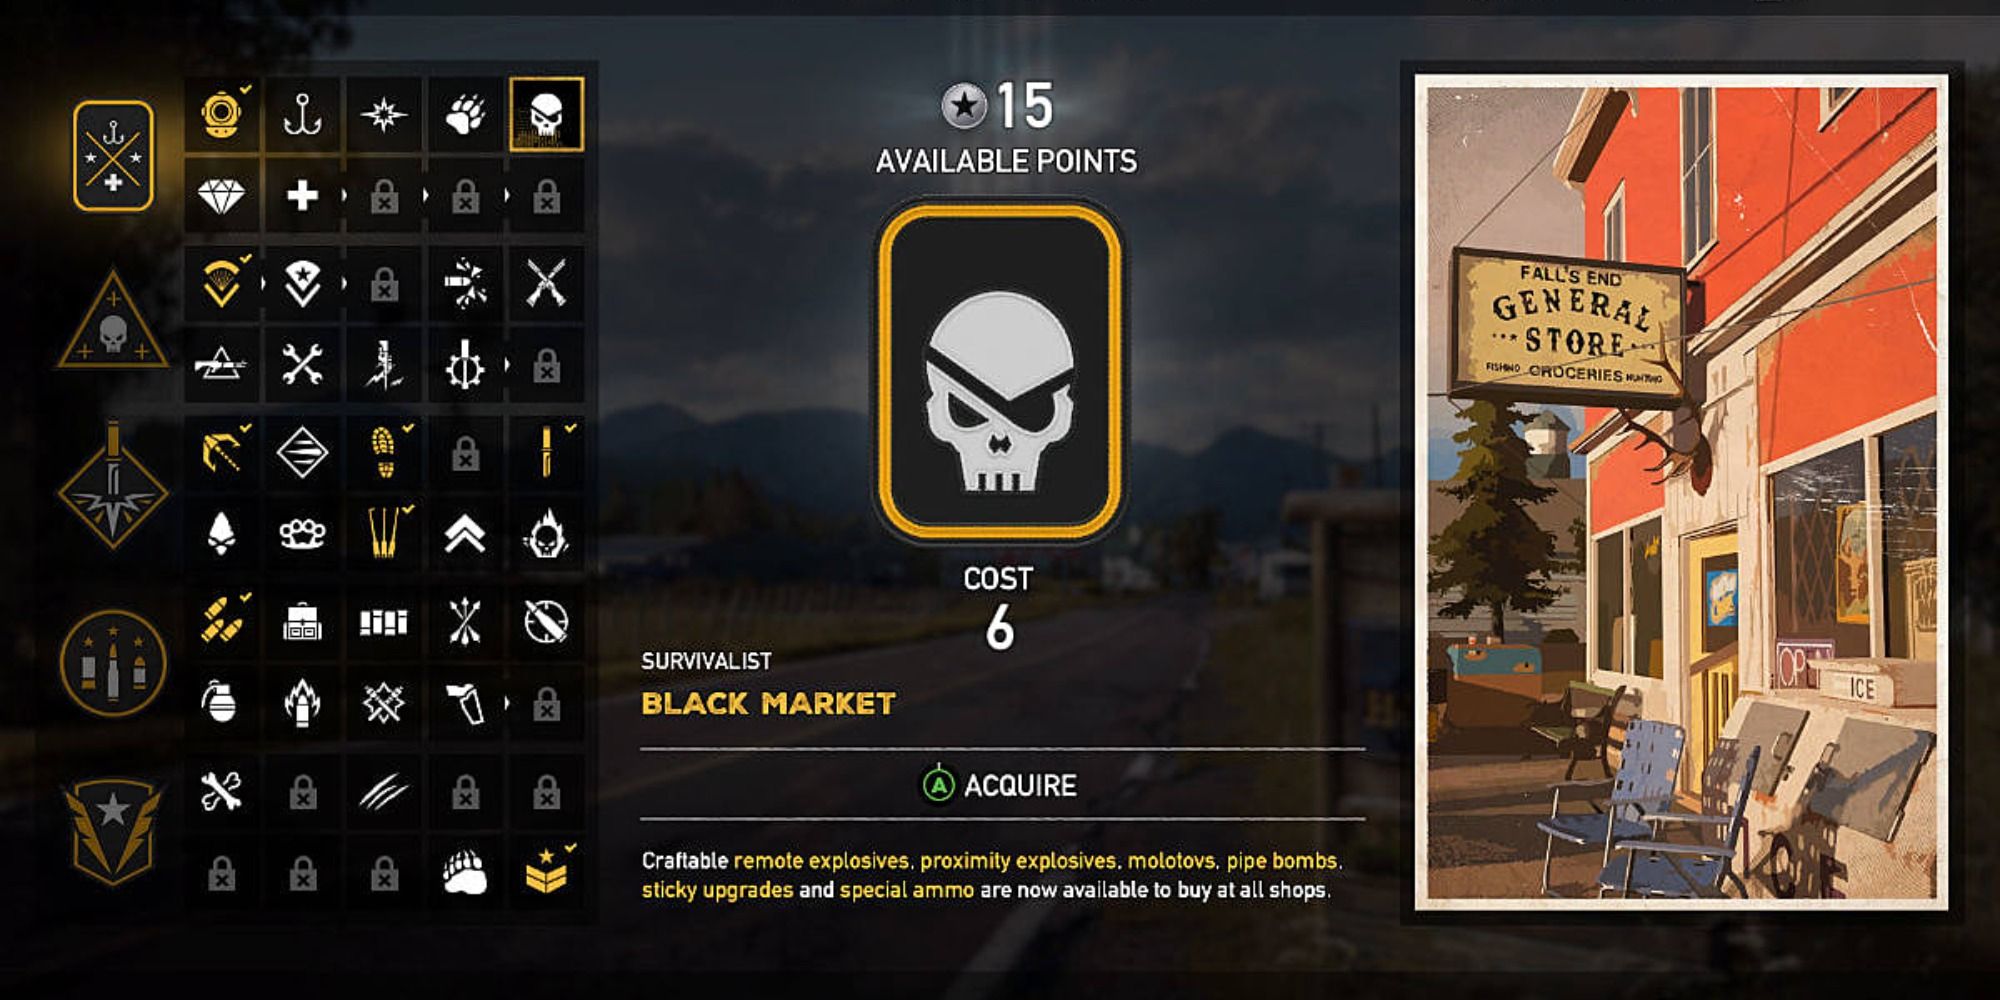 Far Cry 5 Black Market Perk description and artwork